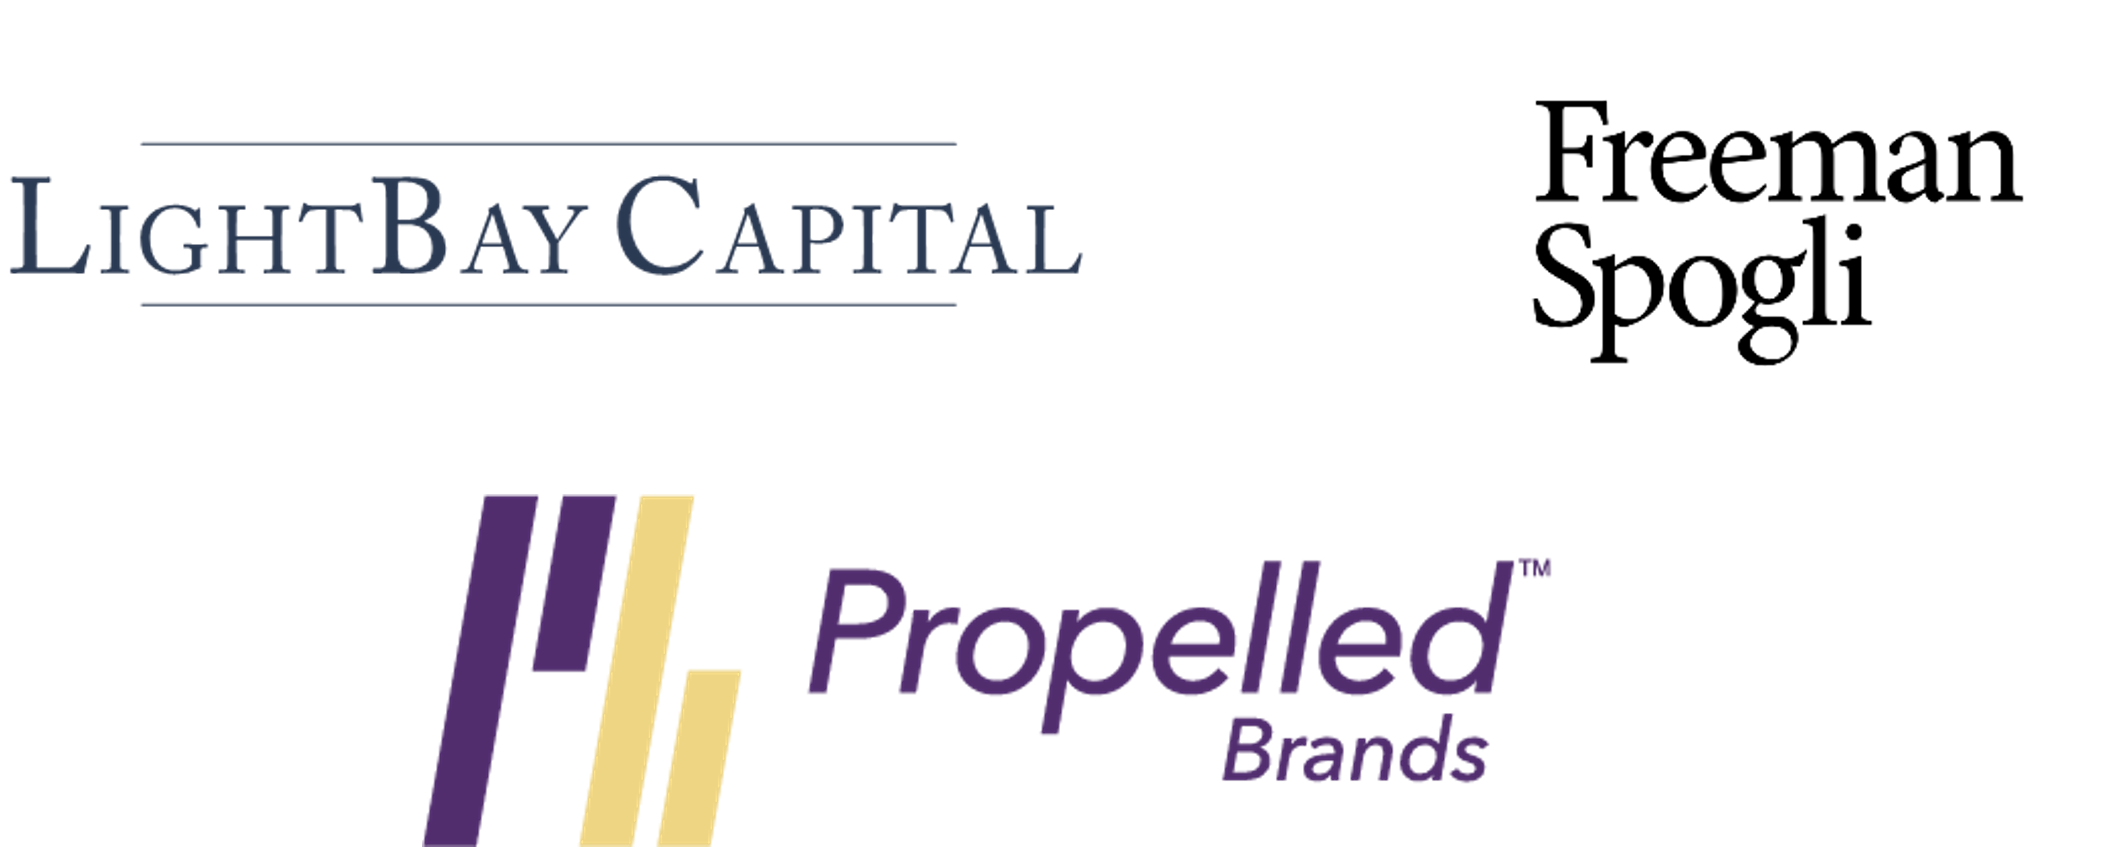 LightBay Capital, Freeman Spogli, Propelled Brands